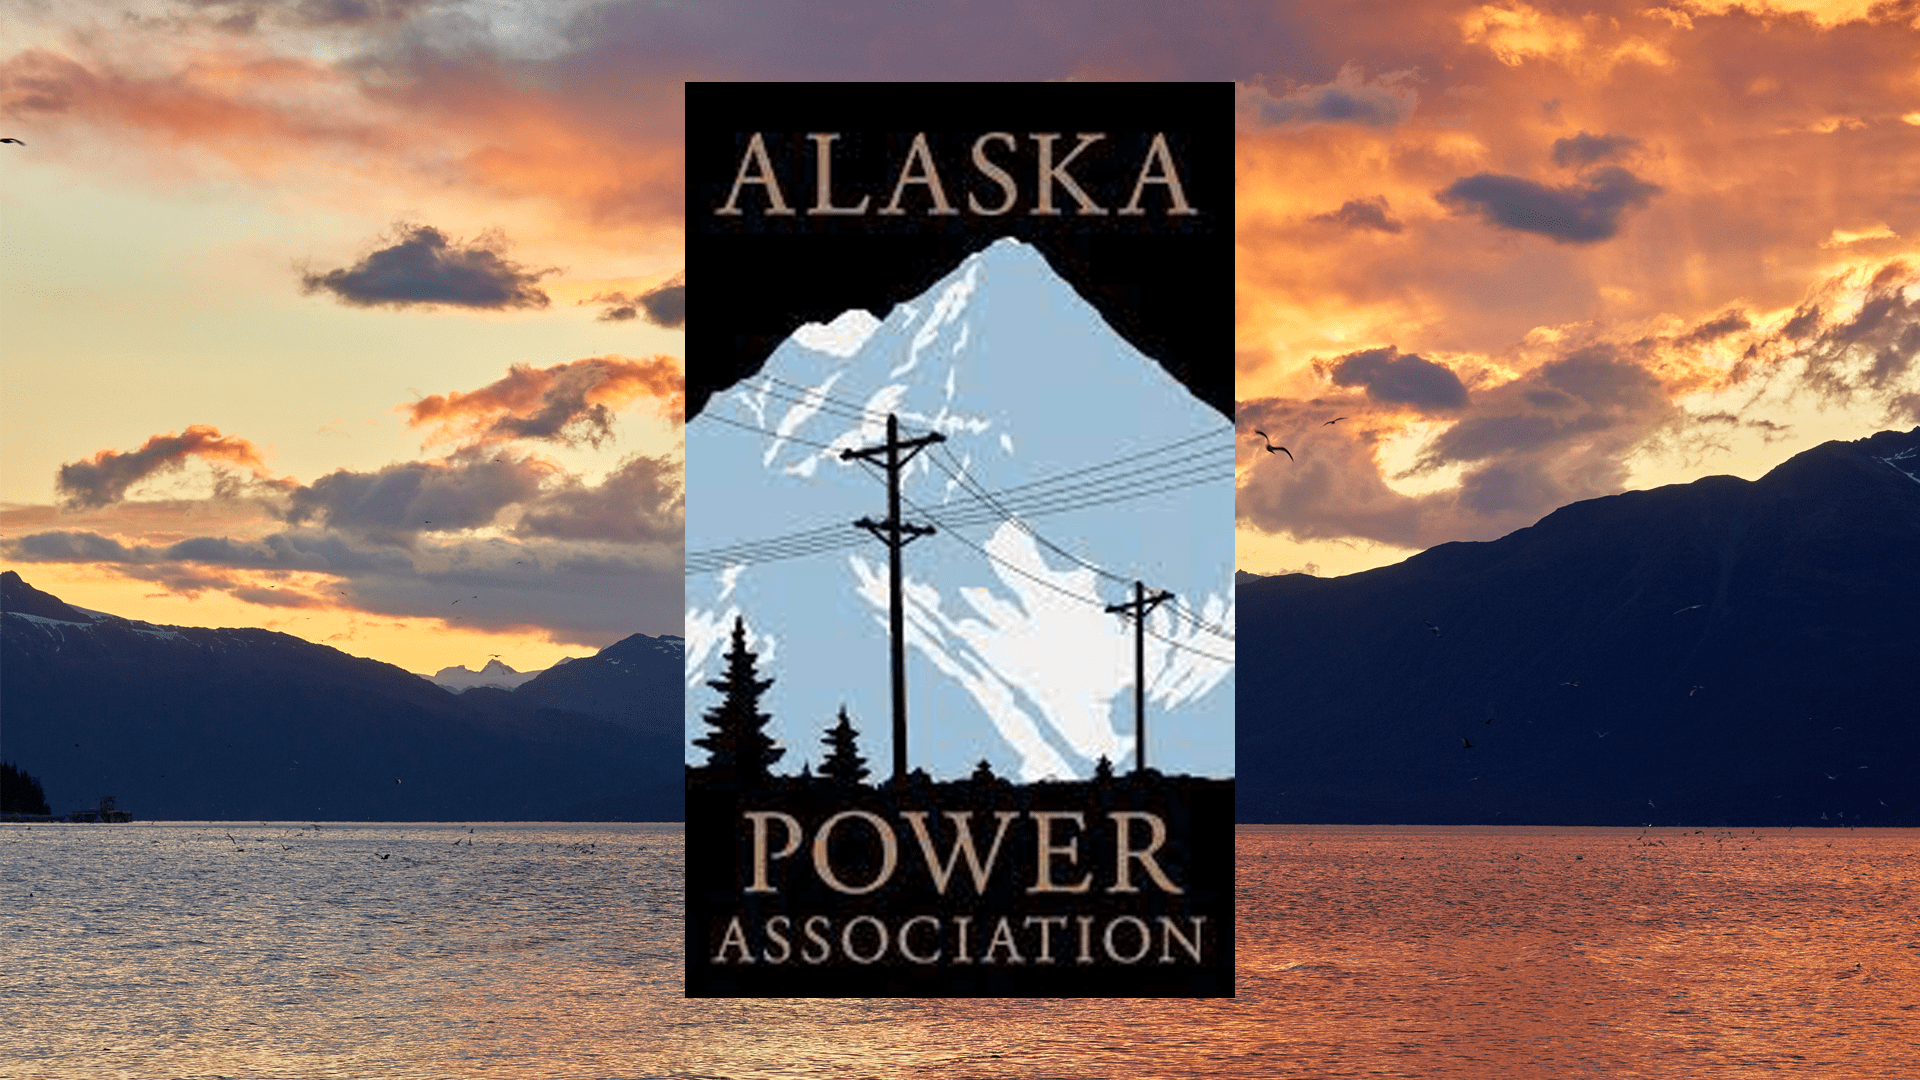 Alaska Power Association Annual Meeting, Valdez, AK